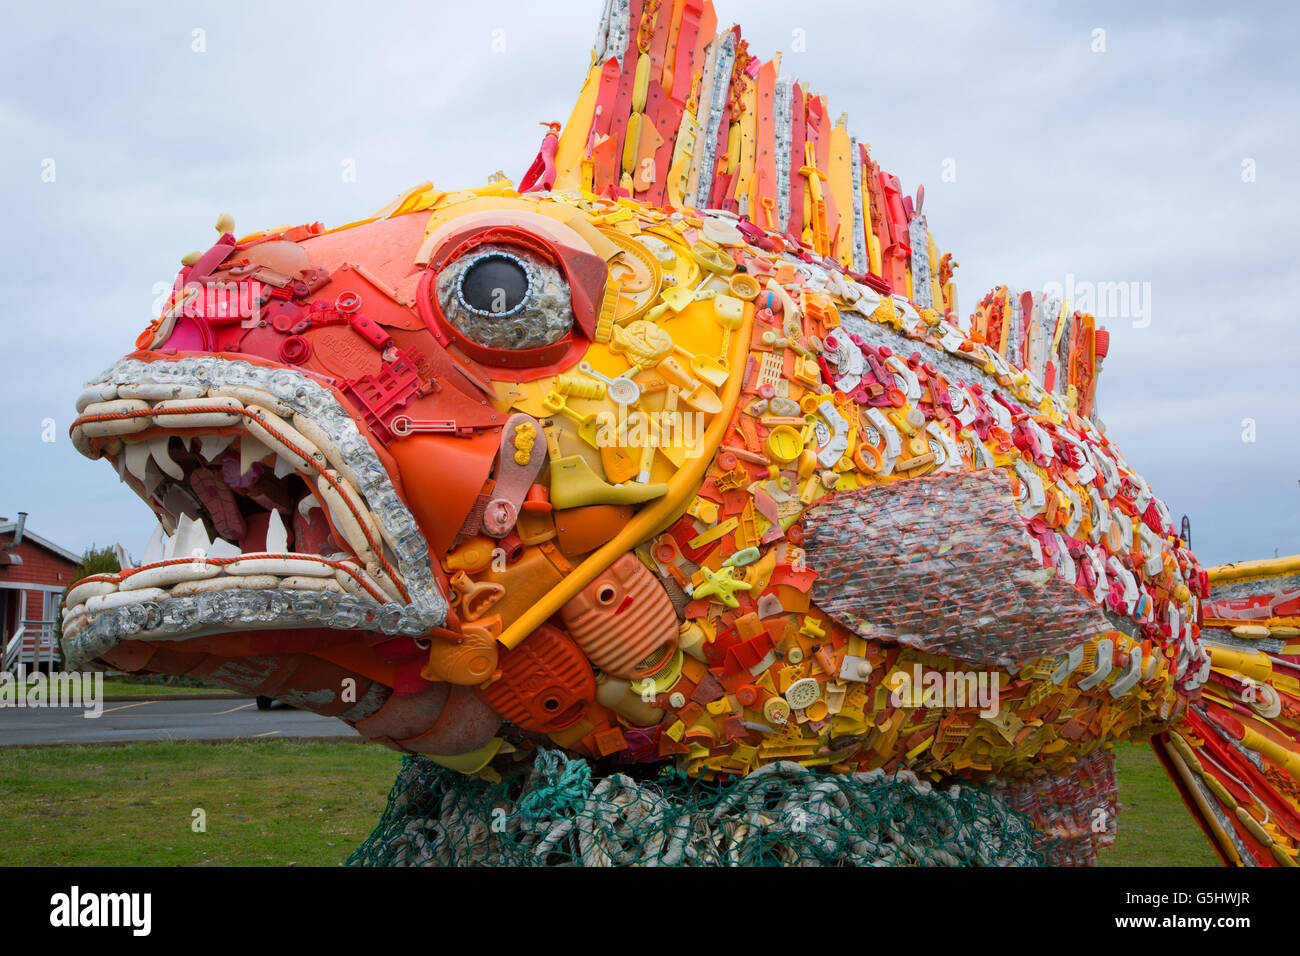 Henry the Fish trash sculpture, Bandon, Oregon Stock Photo